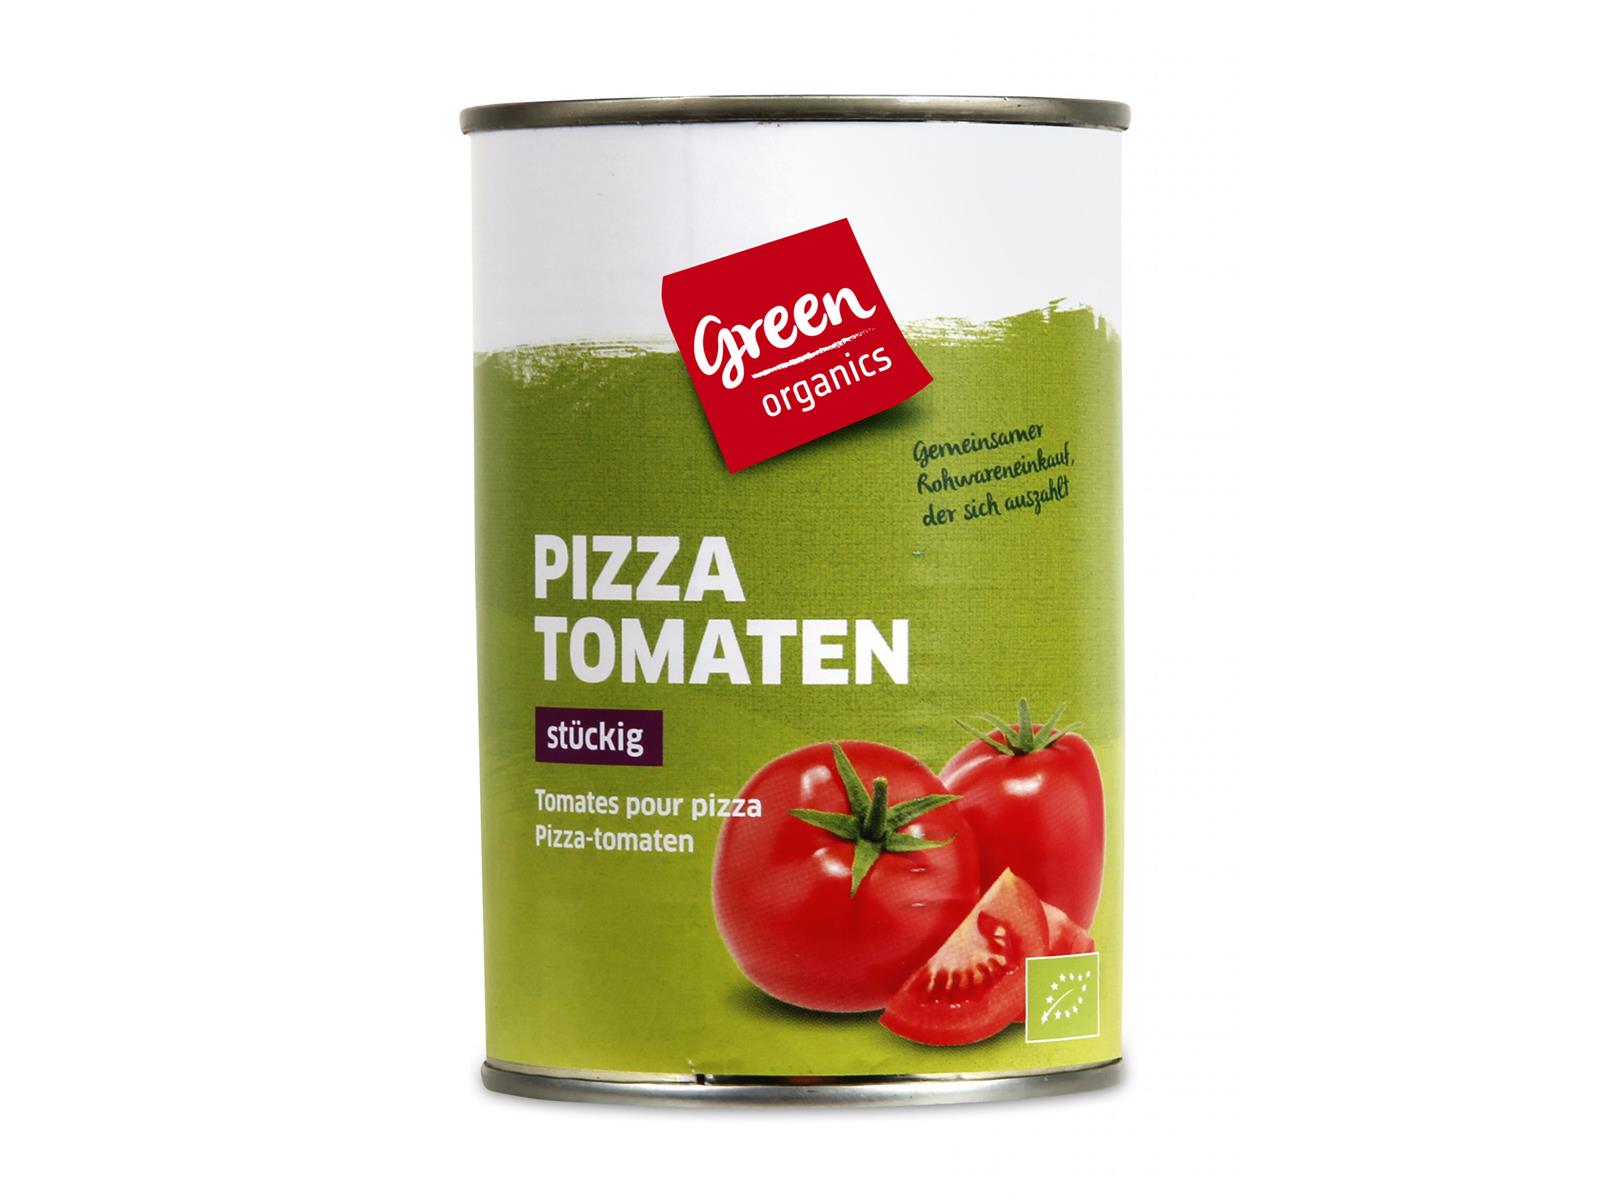 greenorganics Pizza Tomaten 400g